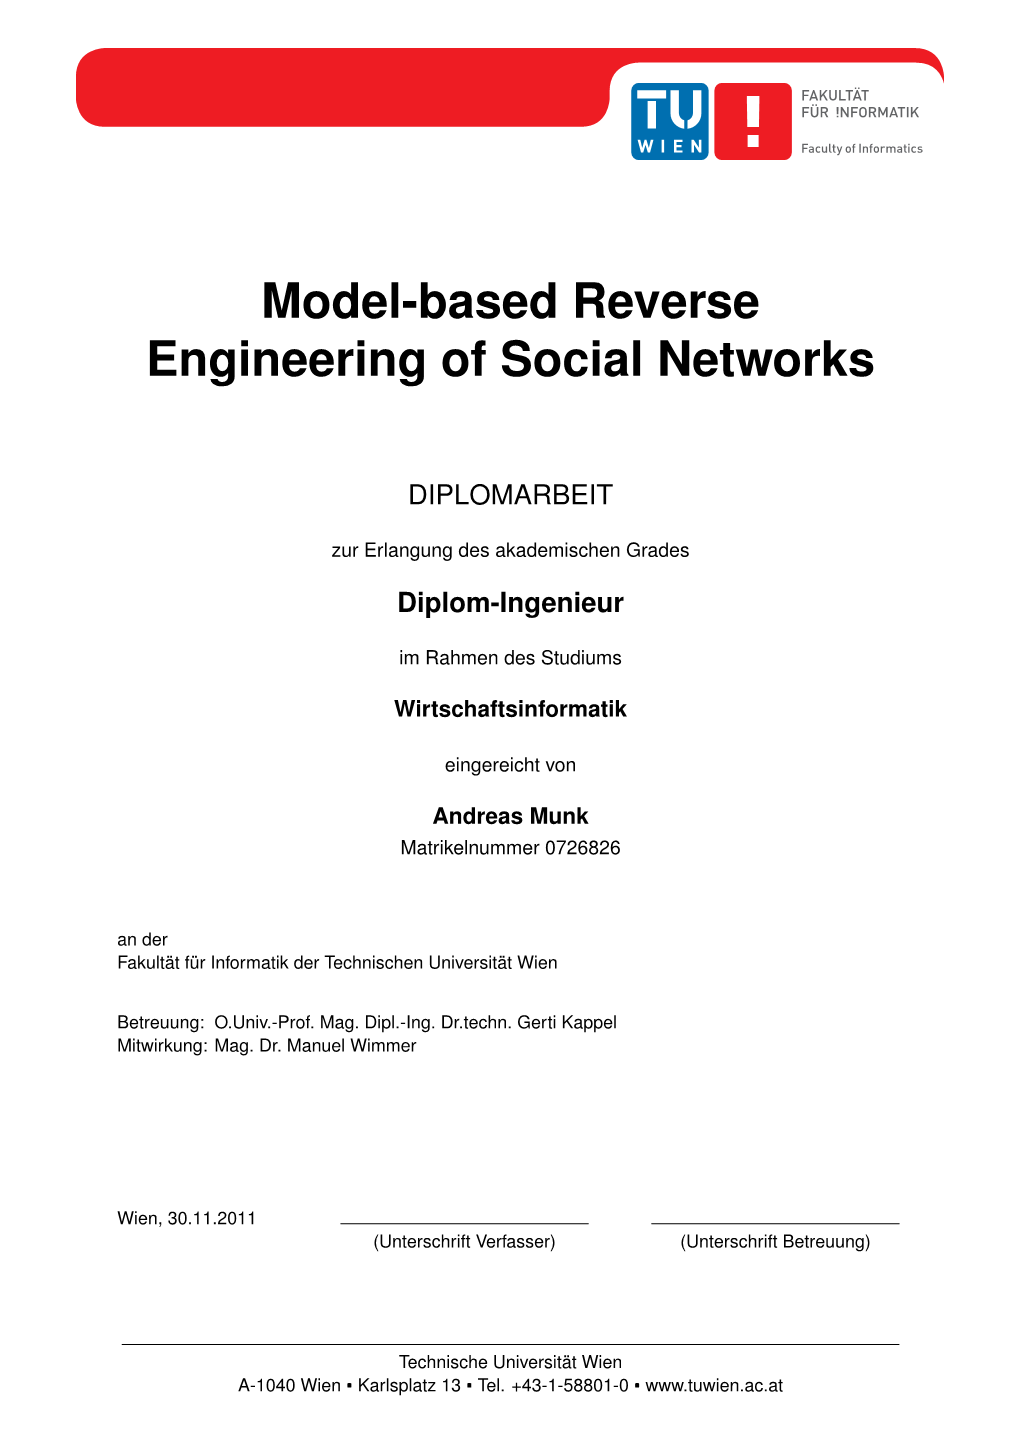 Model-Based Reverse Engineering of Social Networks